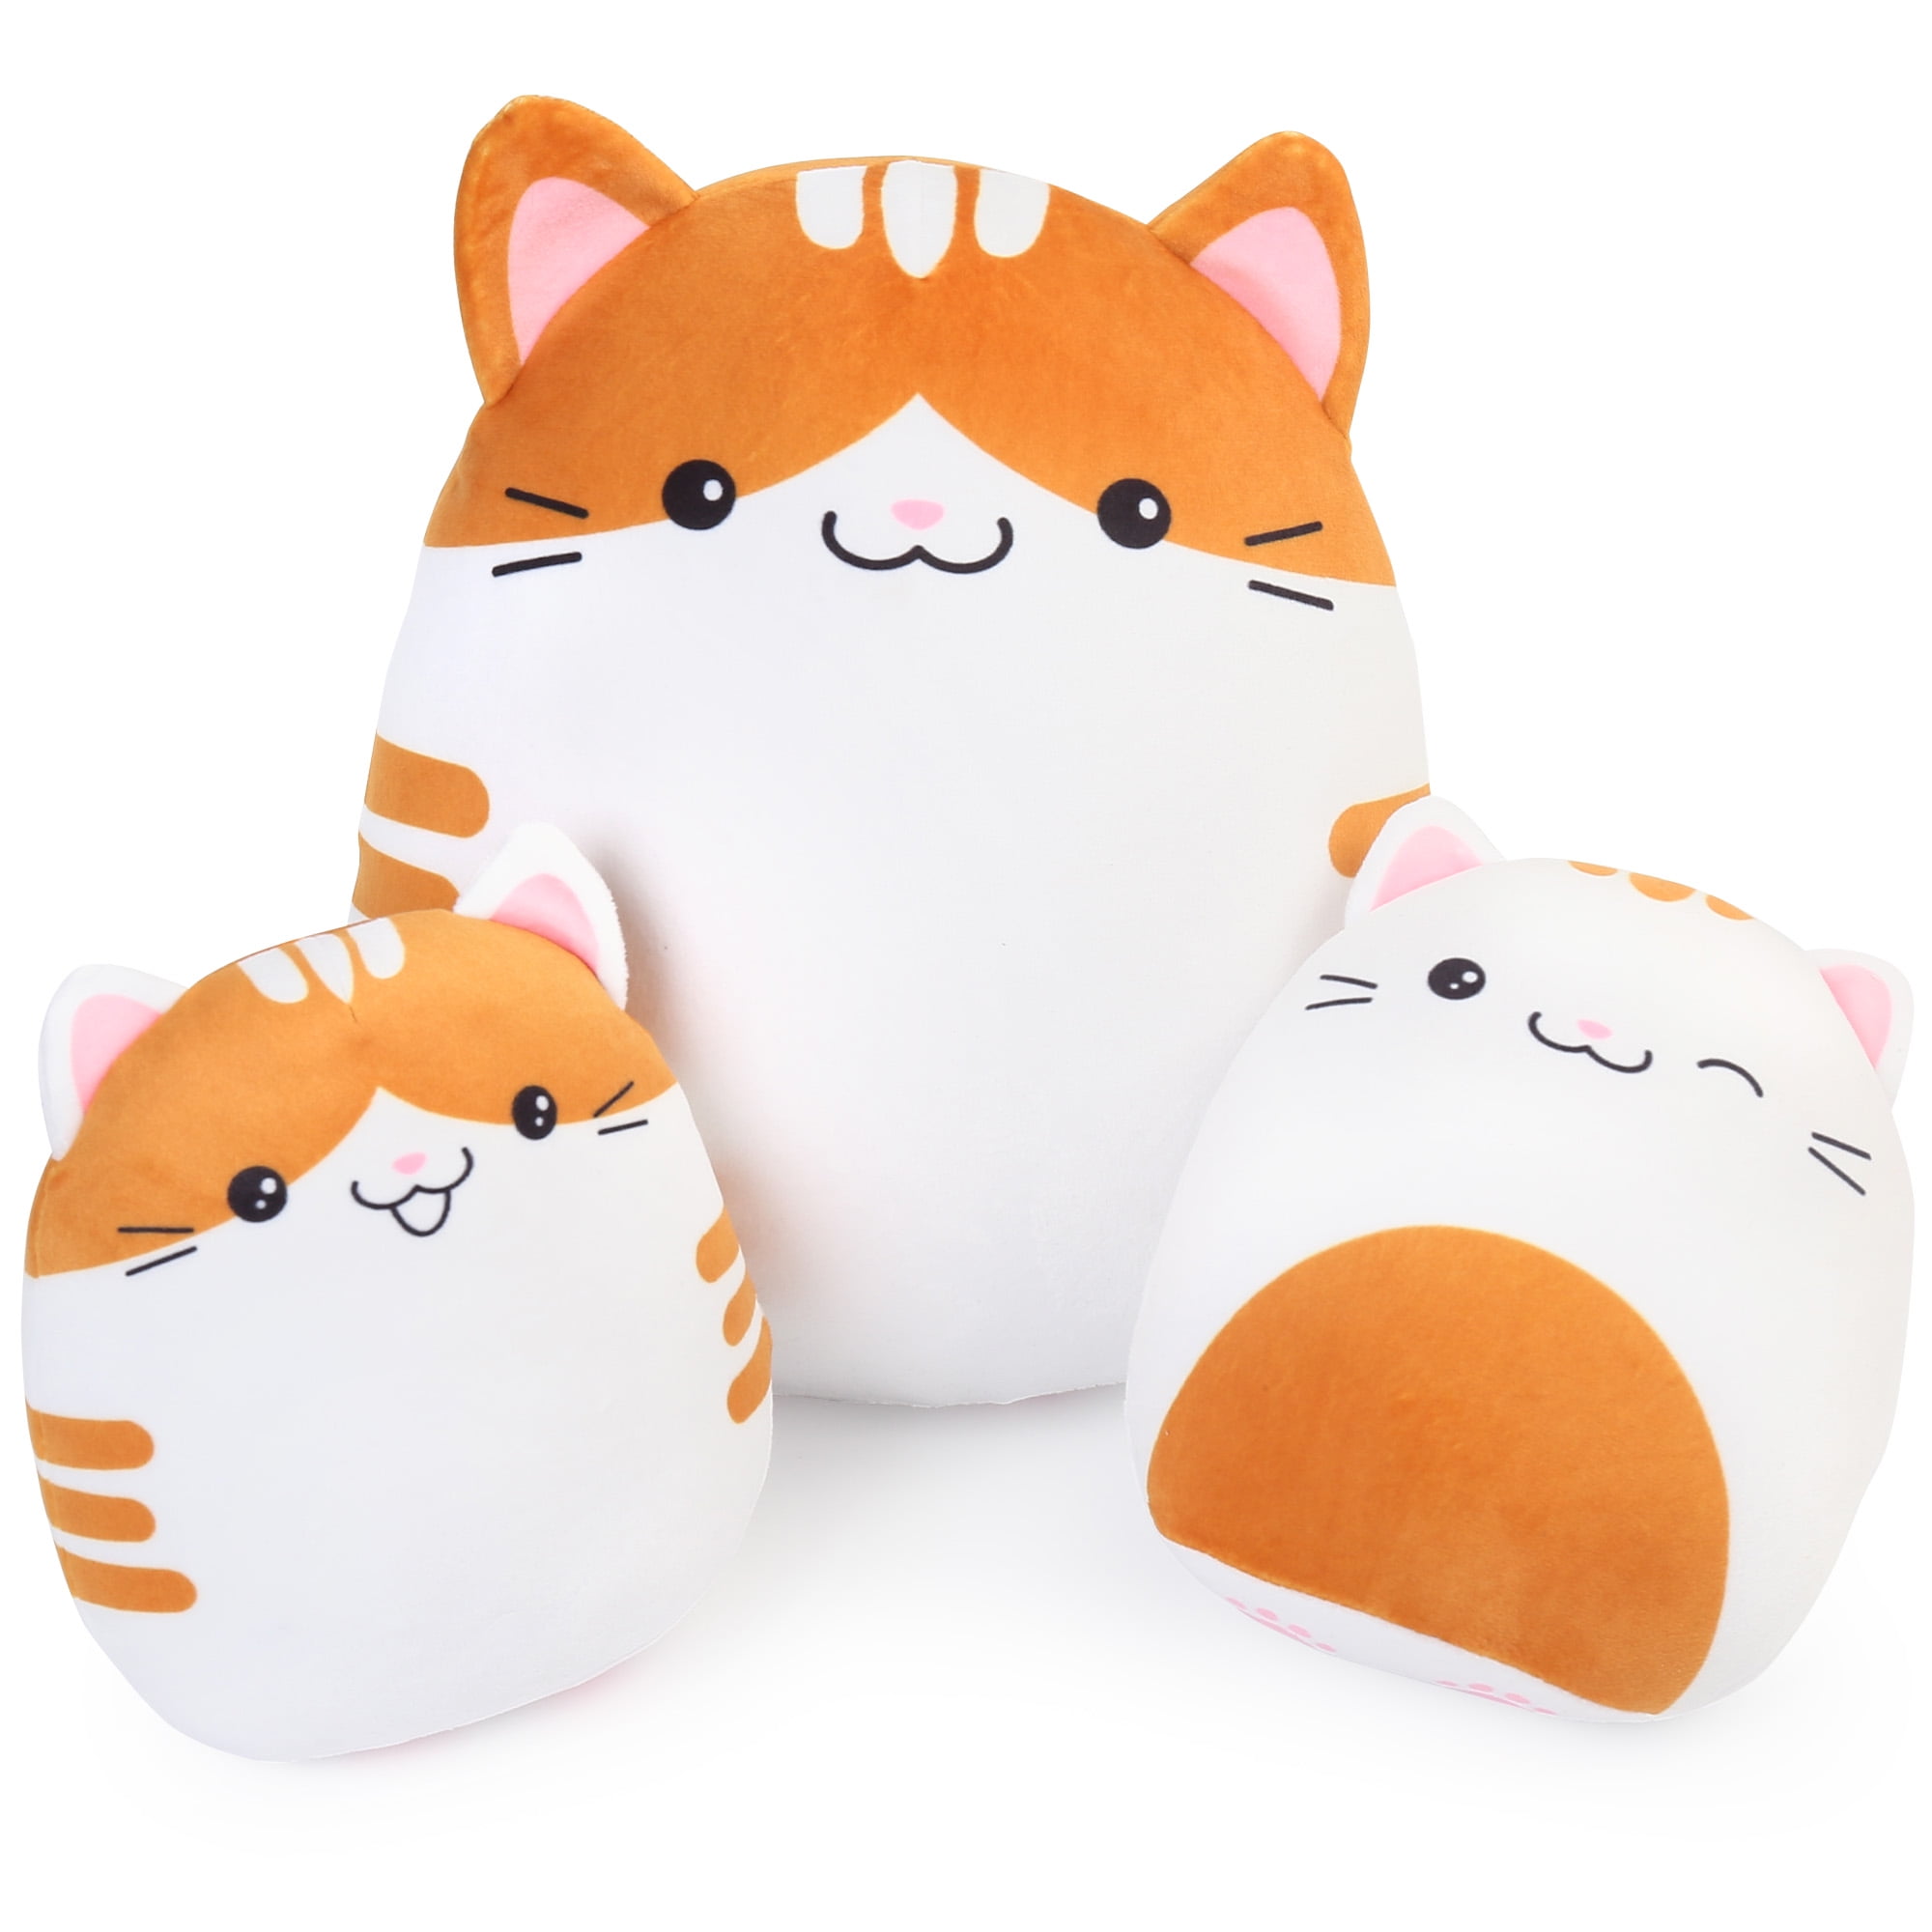 3 Cat Plush Pillow, Squishy Kitty Stuffed Animals Hugging Pillows for ...